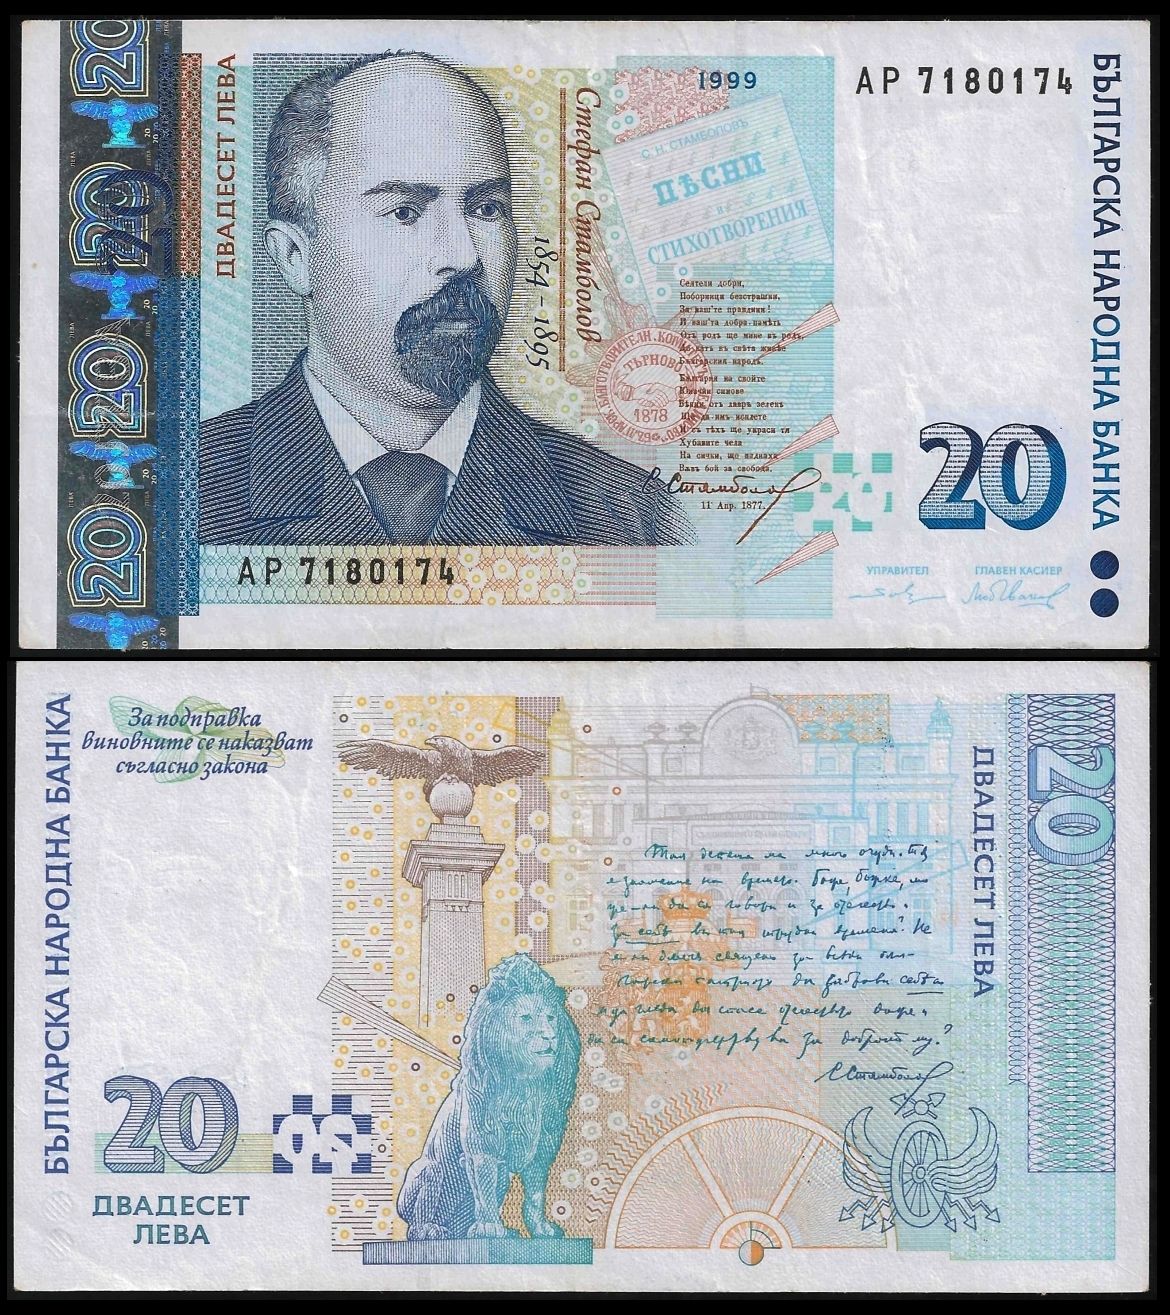 20 leva Bulgaria 1999